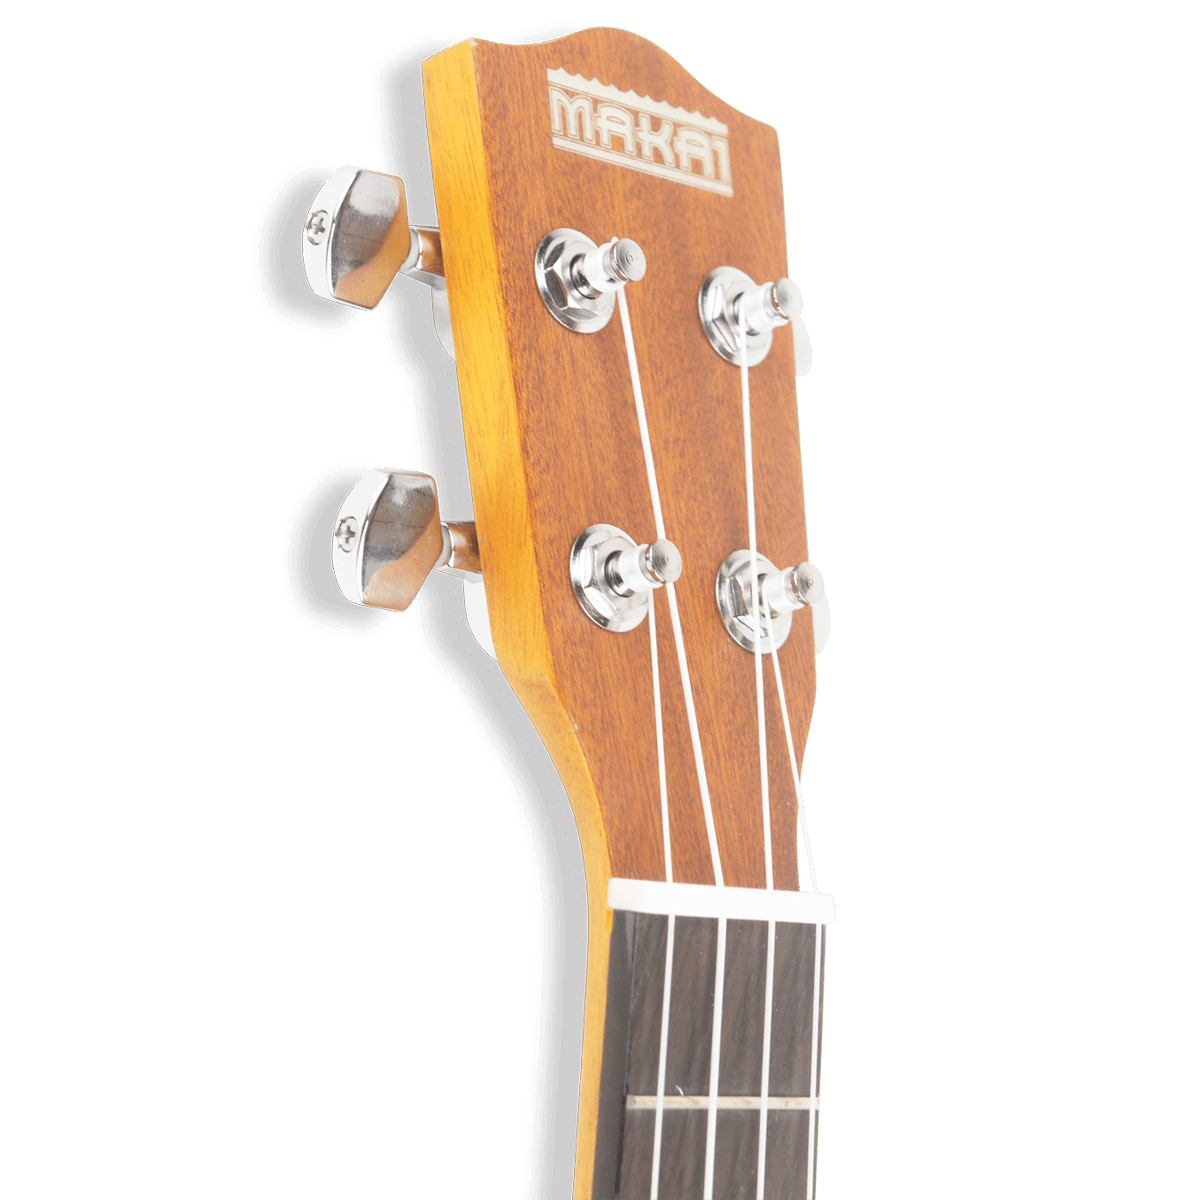 Makai Guitar Makai Ukulele Uke Tenor Solid Top with Double U0 Pickup MT-70-FX - Byron Music